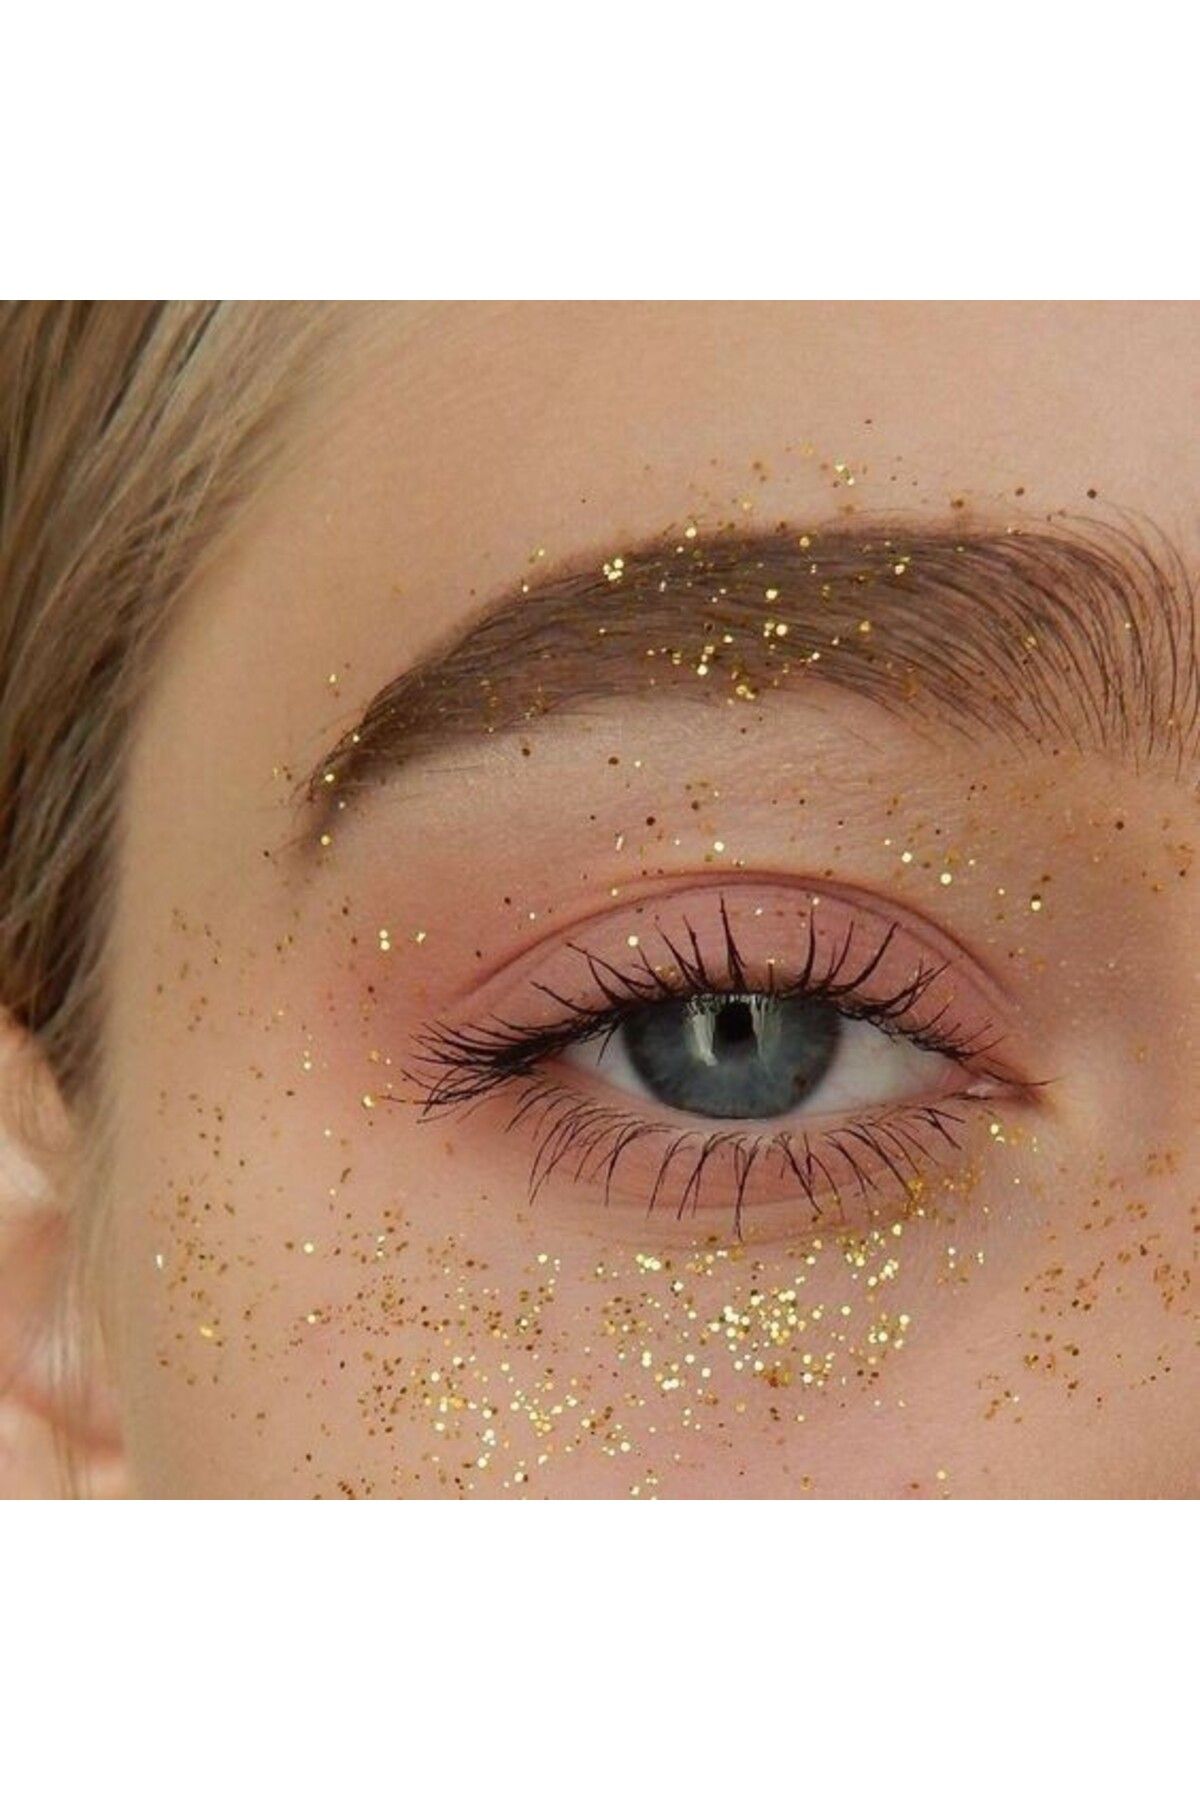 Artikel Gold Göz Simi, Yüz Ve Vücut Parıltısı, Party Glitter Makyaj Simi 5 ml